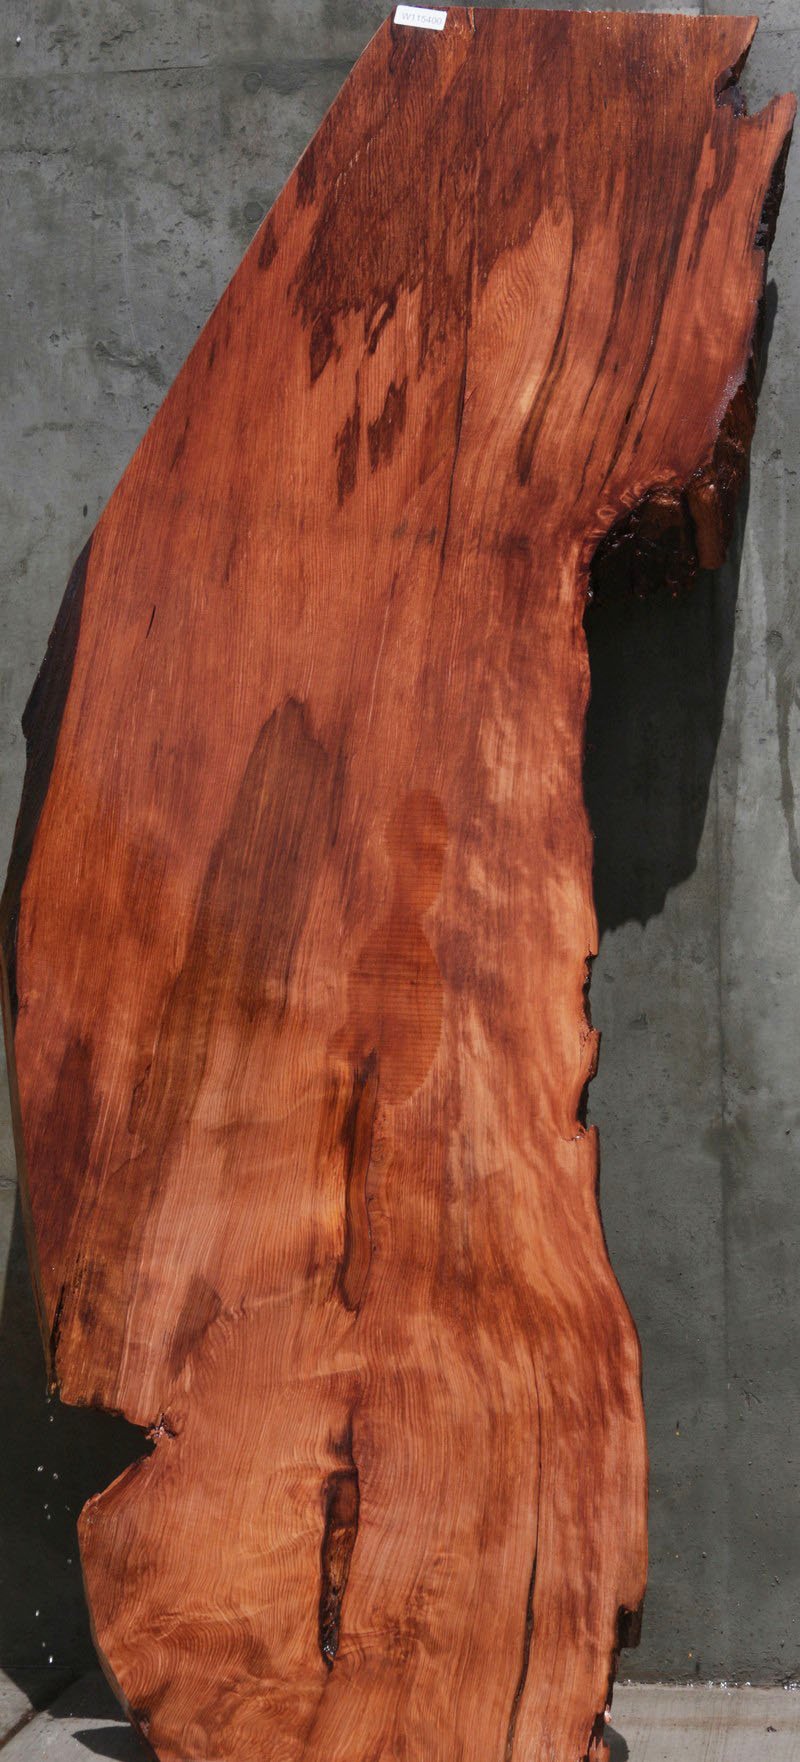 Old Growth Redwood Slab